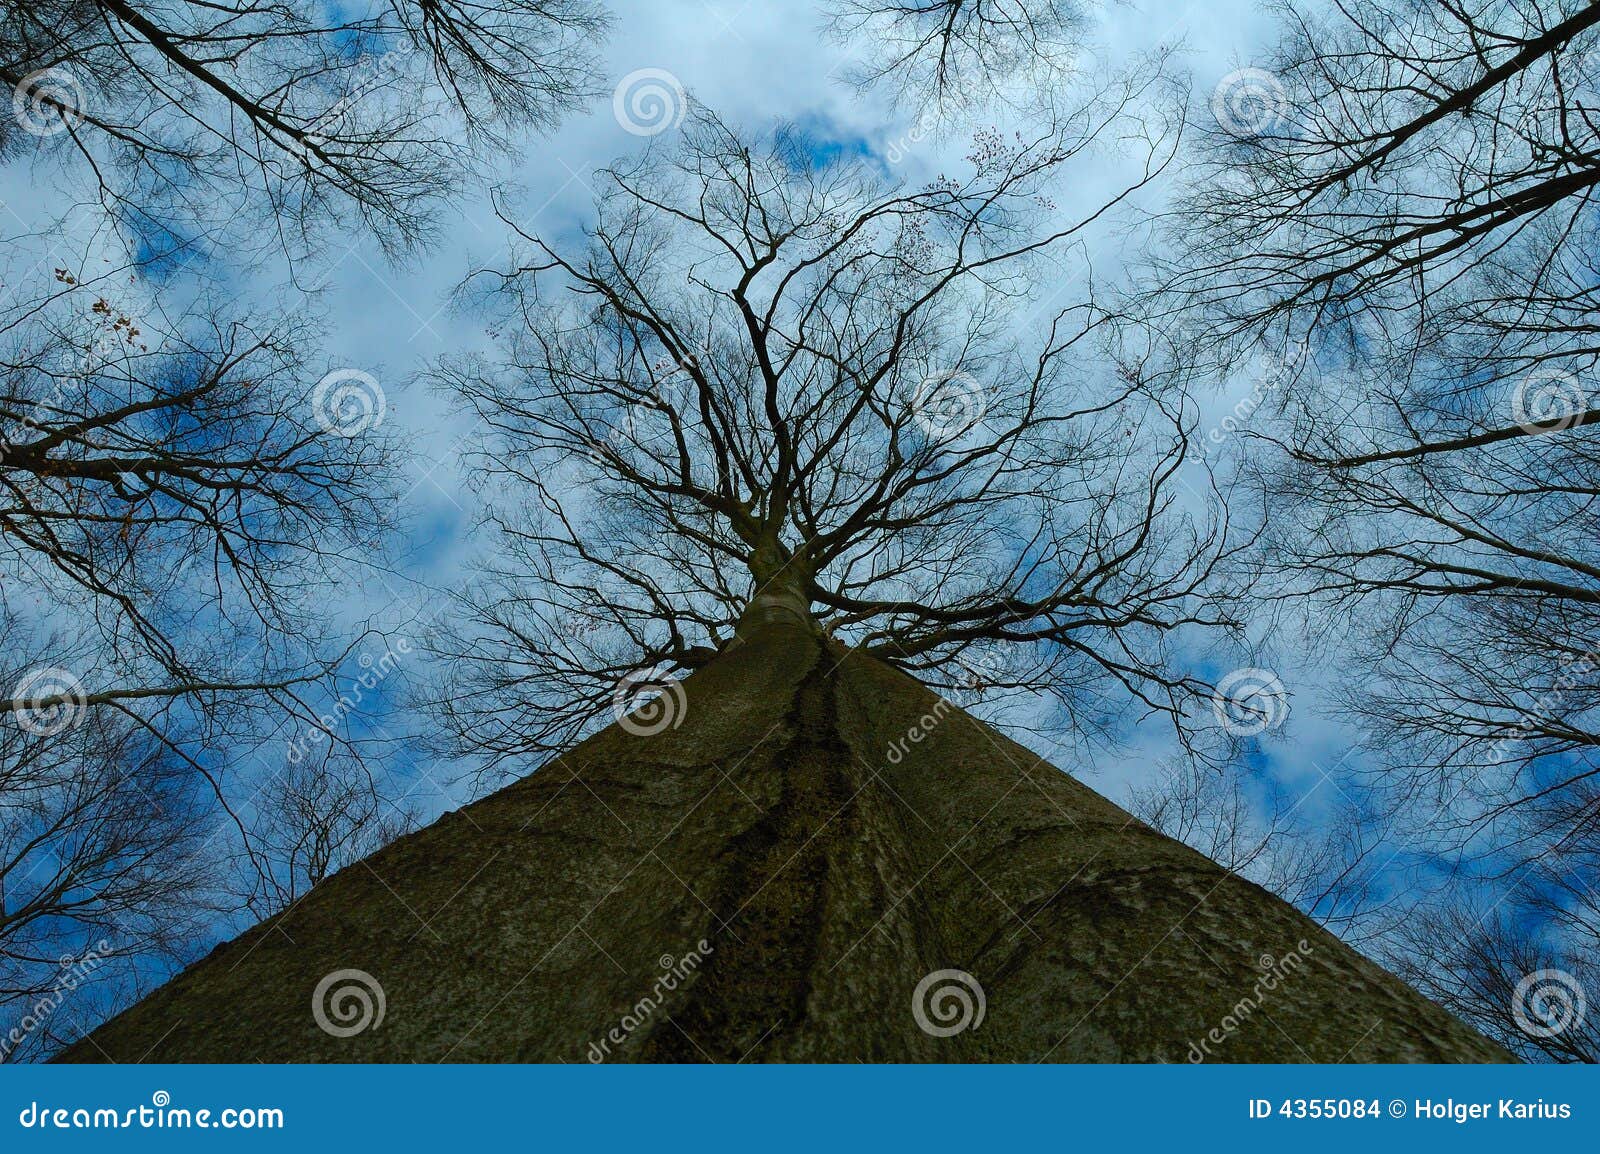 big tree - treetop